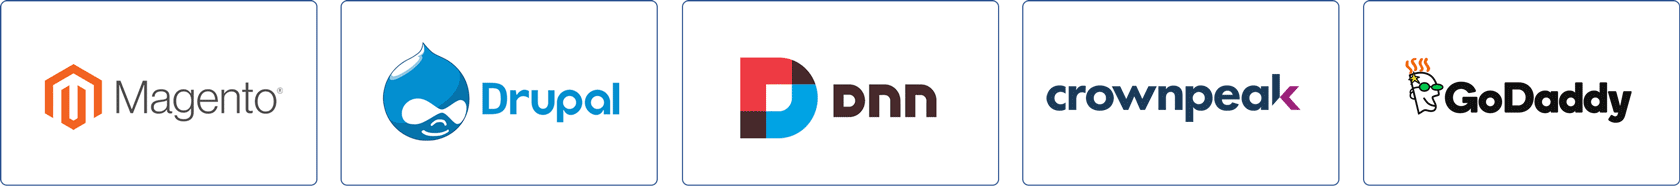 Magento, Drupal, DNN, Crownpeak, and GoDaddy logos